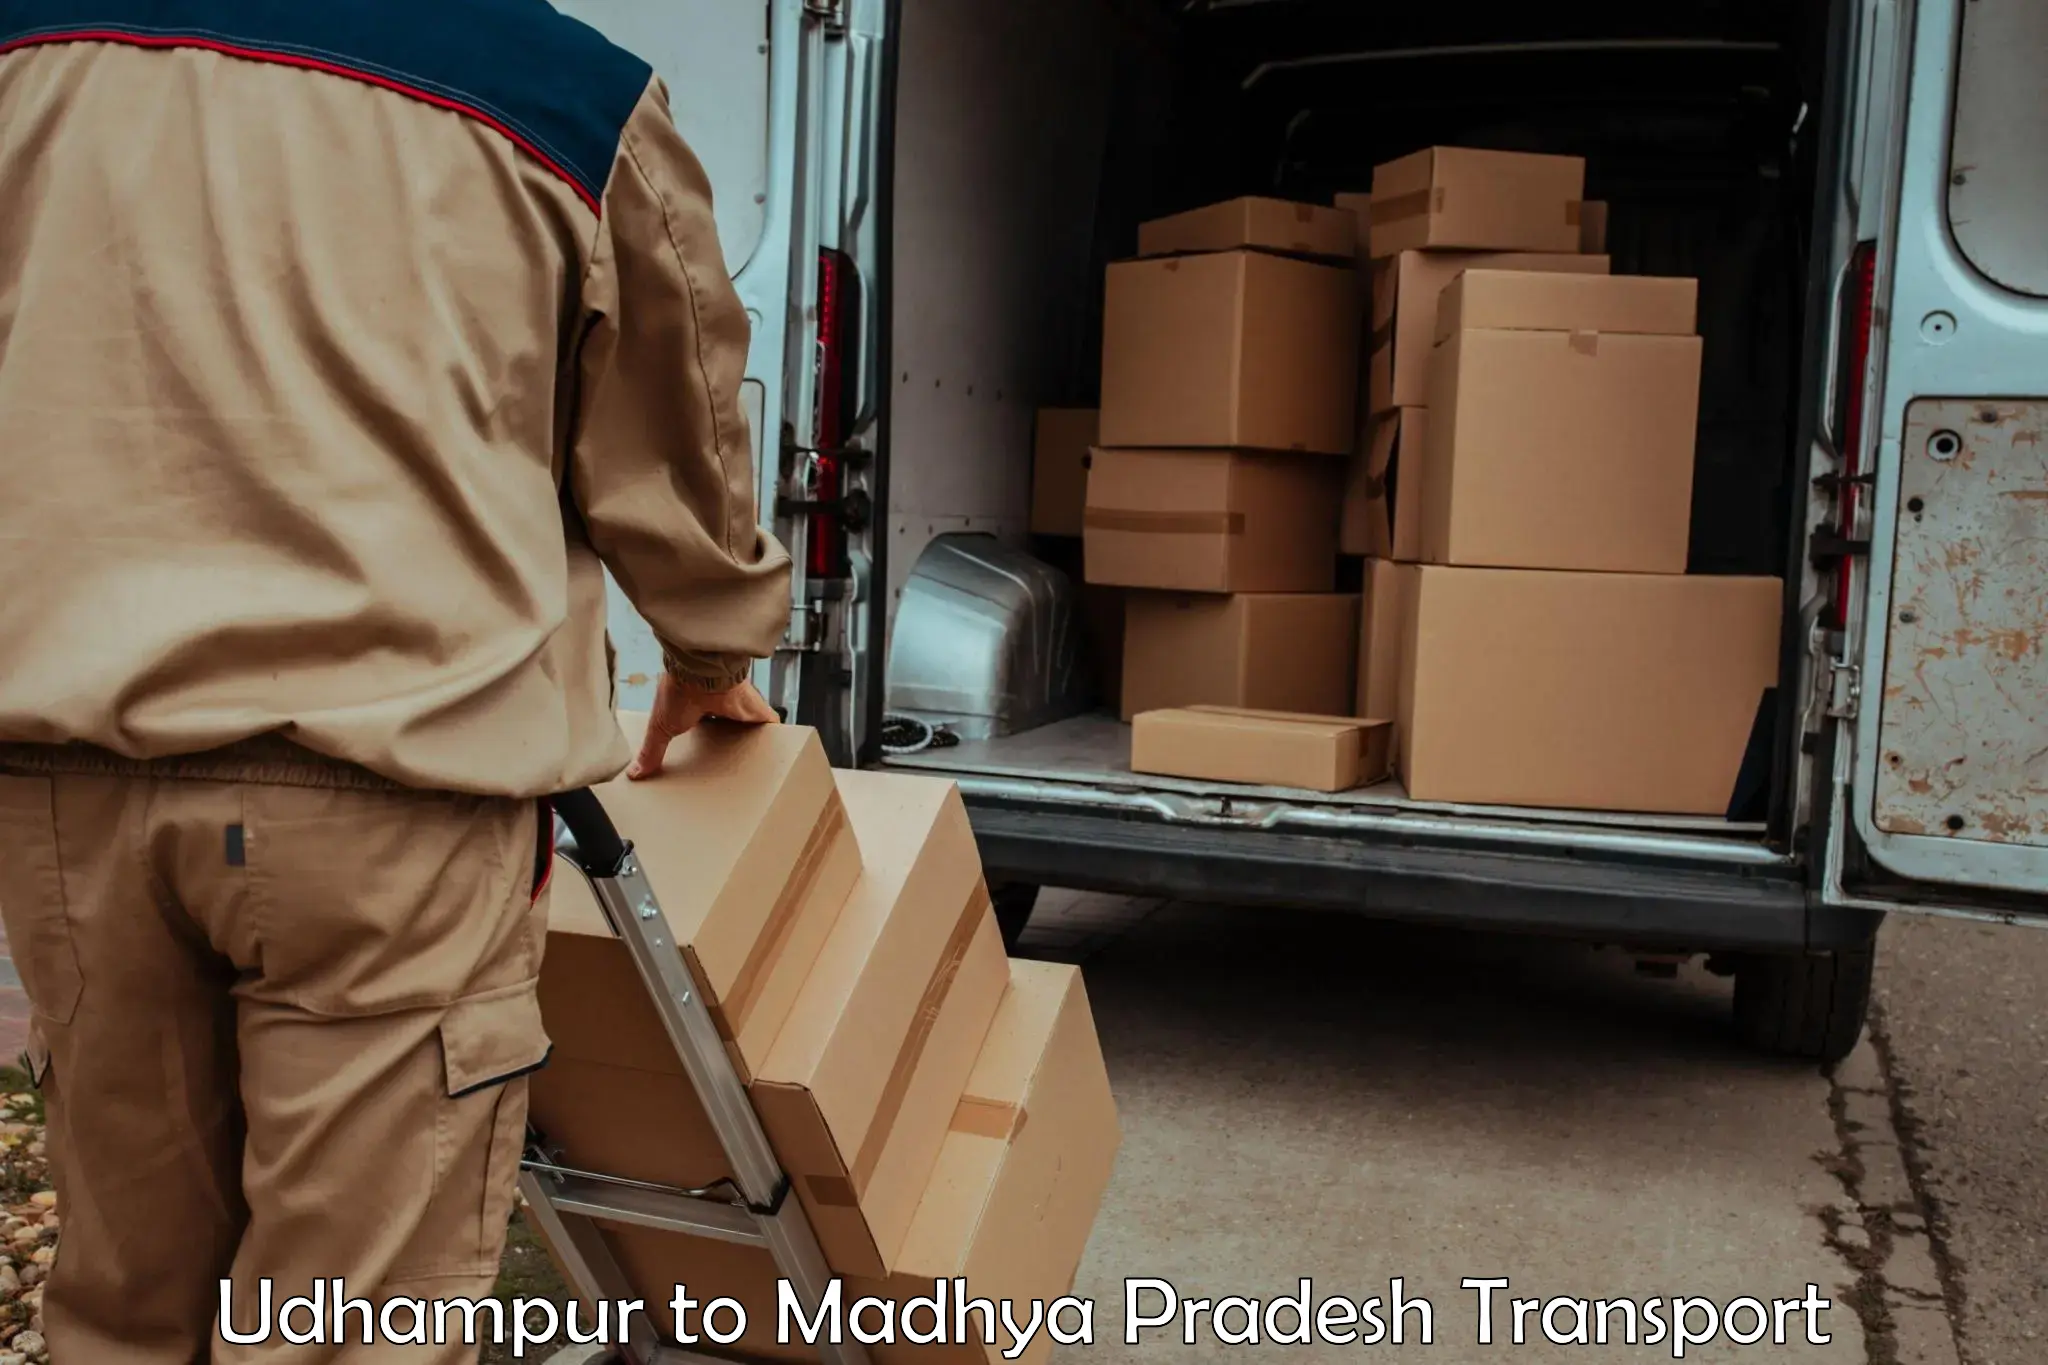 Intercity goods transport in Udhampur to Rehli